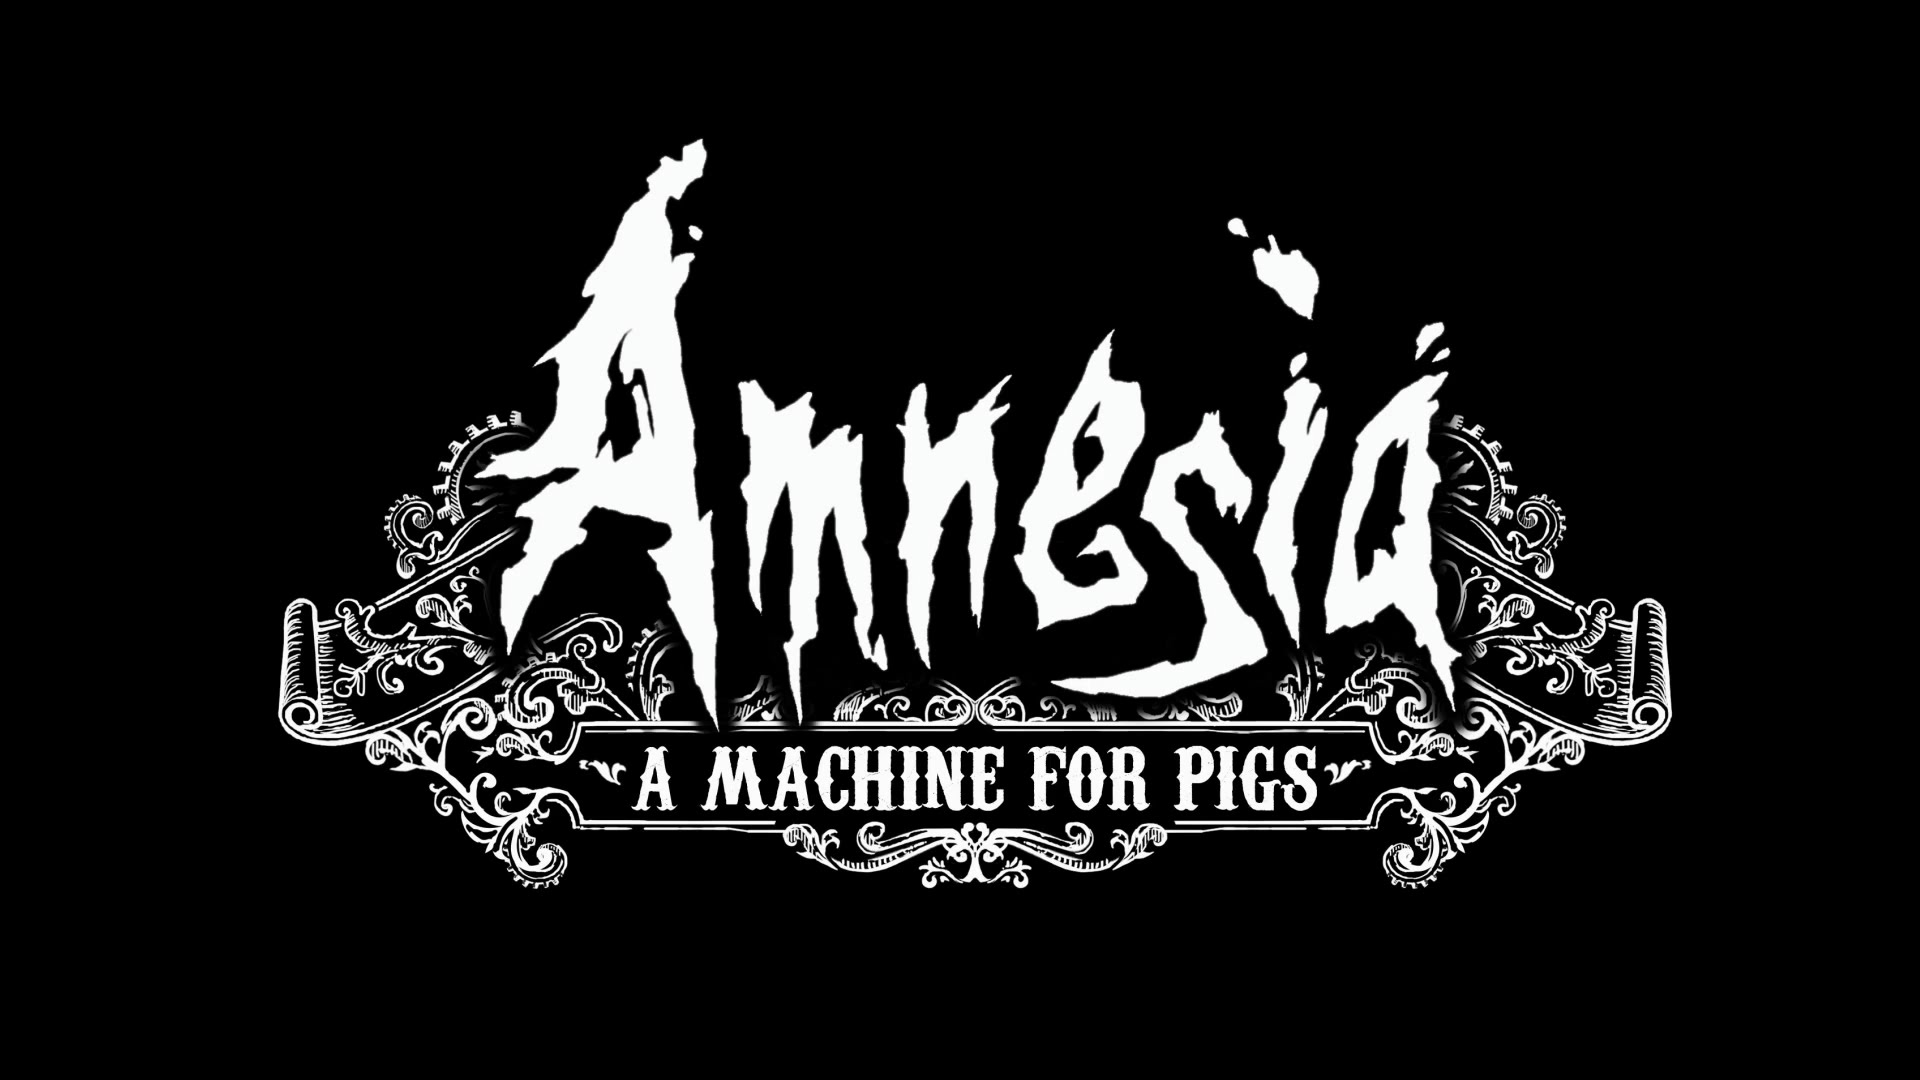 El "porc" cabró. Amnesia: A machine for pigs #6 de ElTeuCanal